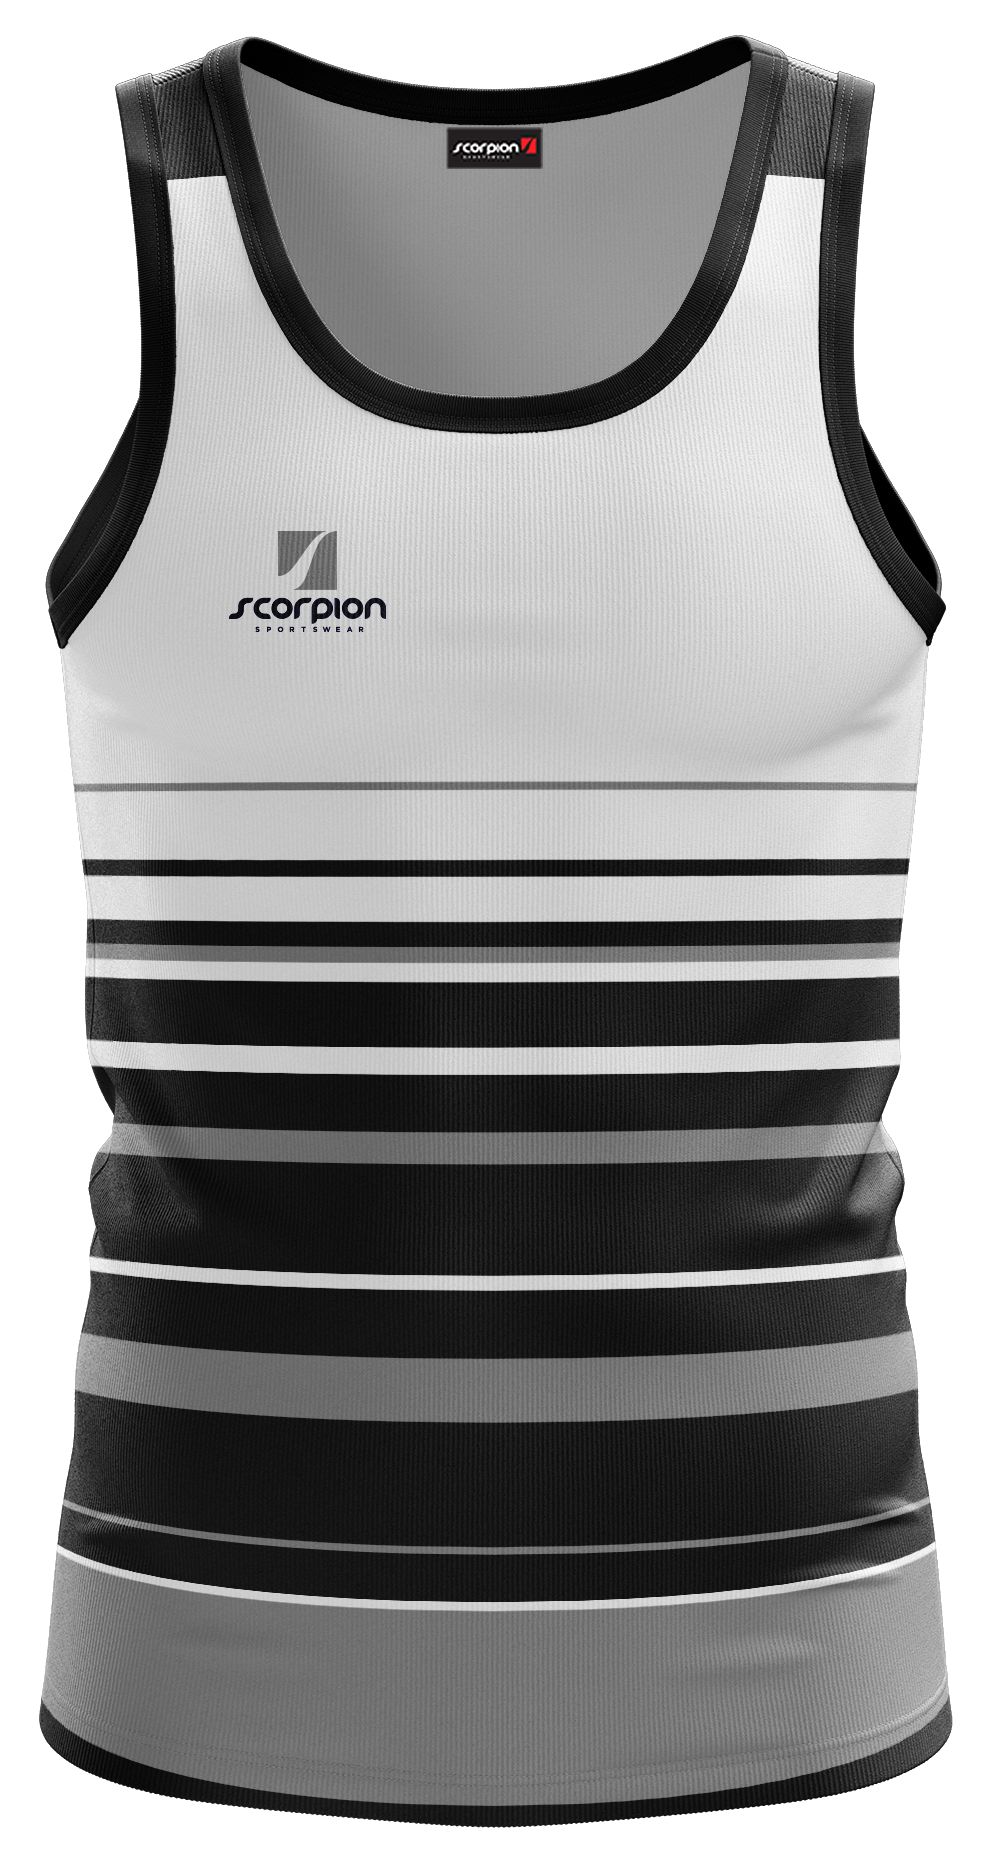 Scorpion Training Vest - White/Black/Charcoal